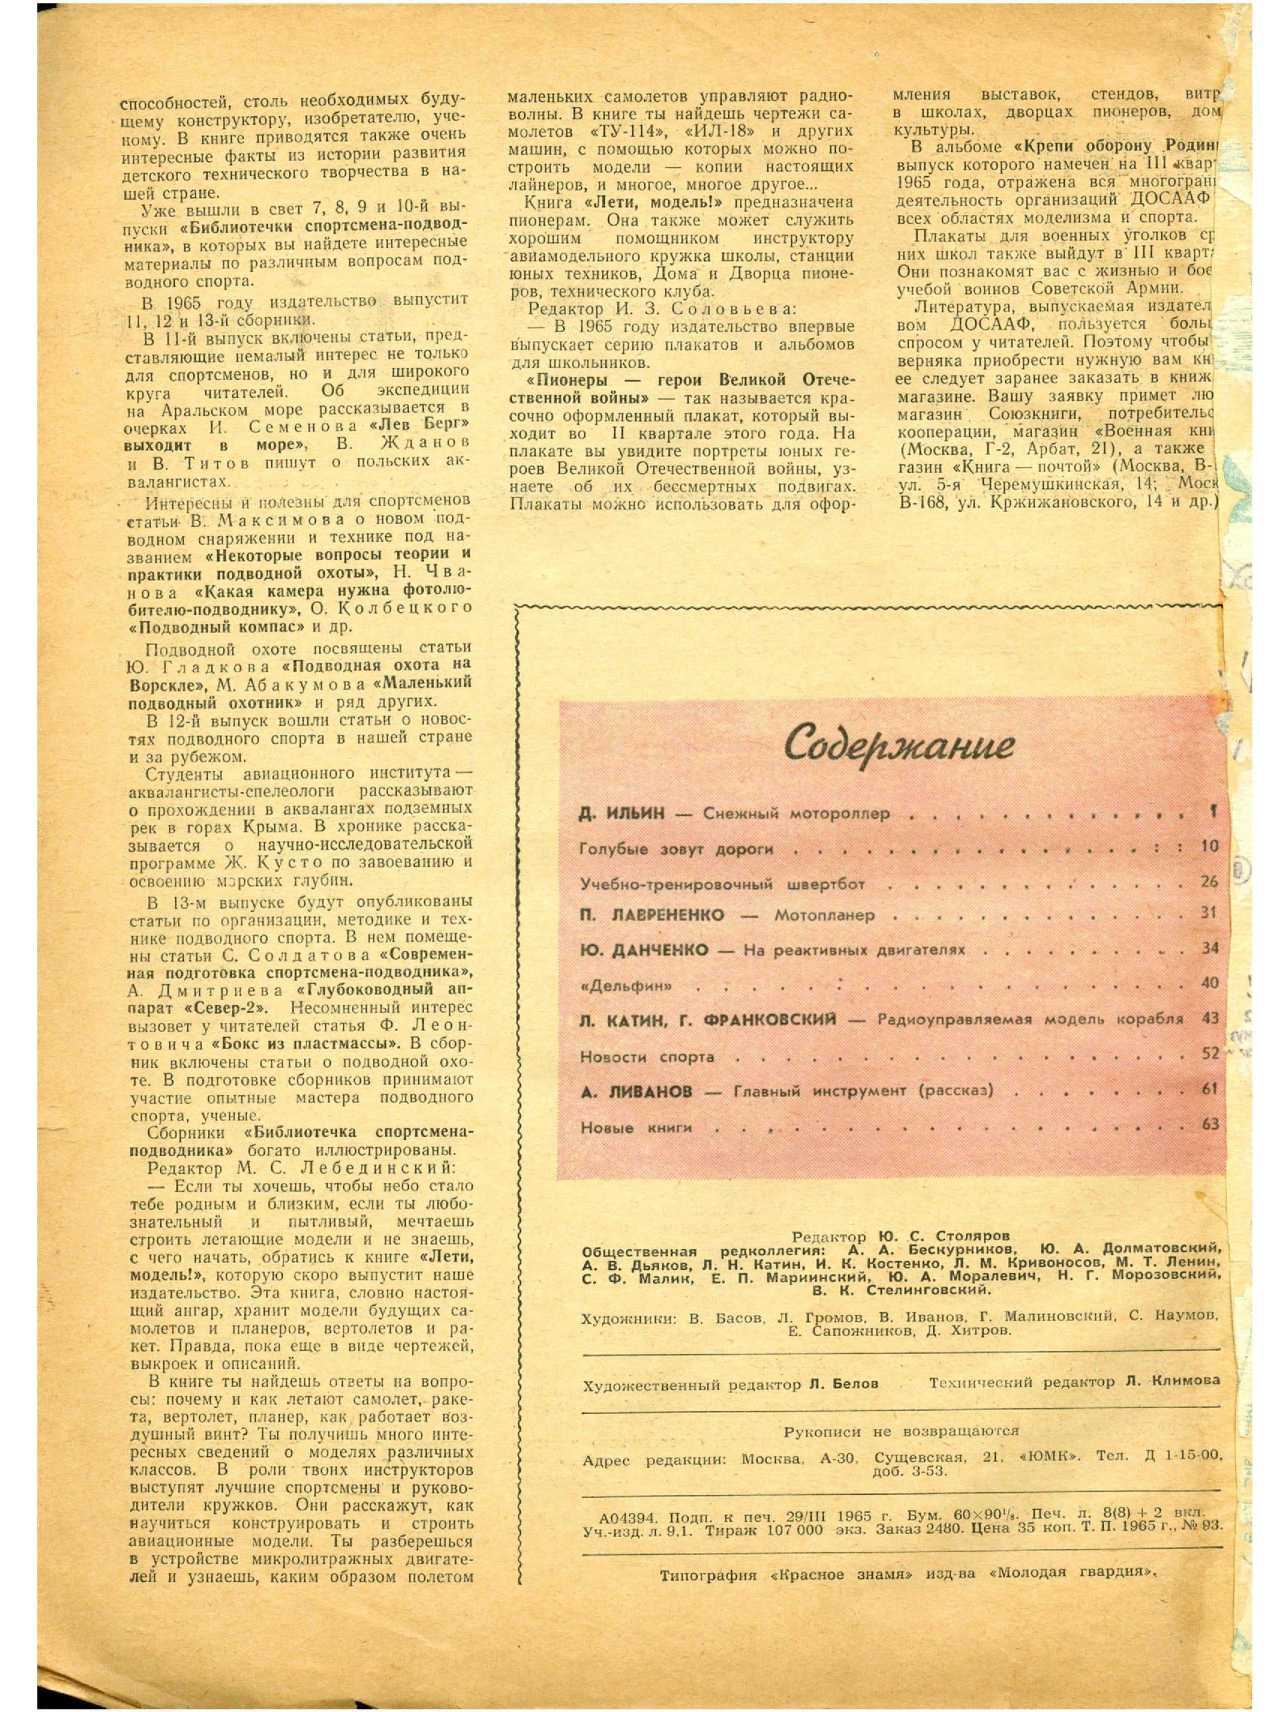 ЮМК 11, 1965, 64 c.